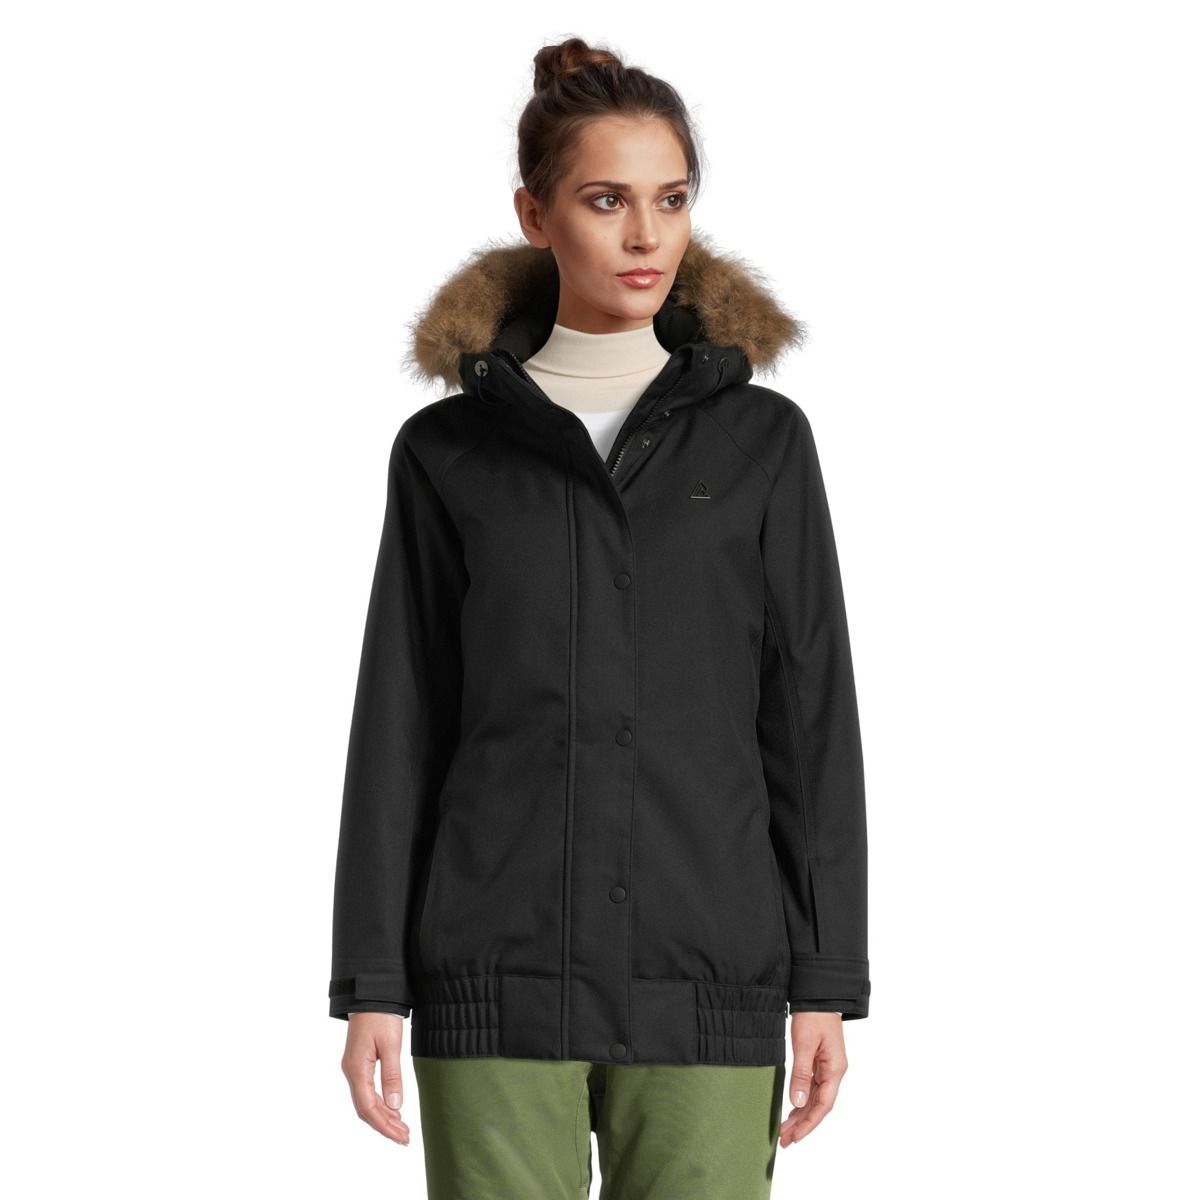 Ripzone Women's Lyton Winter Ski Jacket, Insulated, Hooded, Waterproof ...